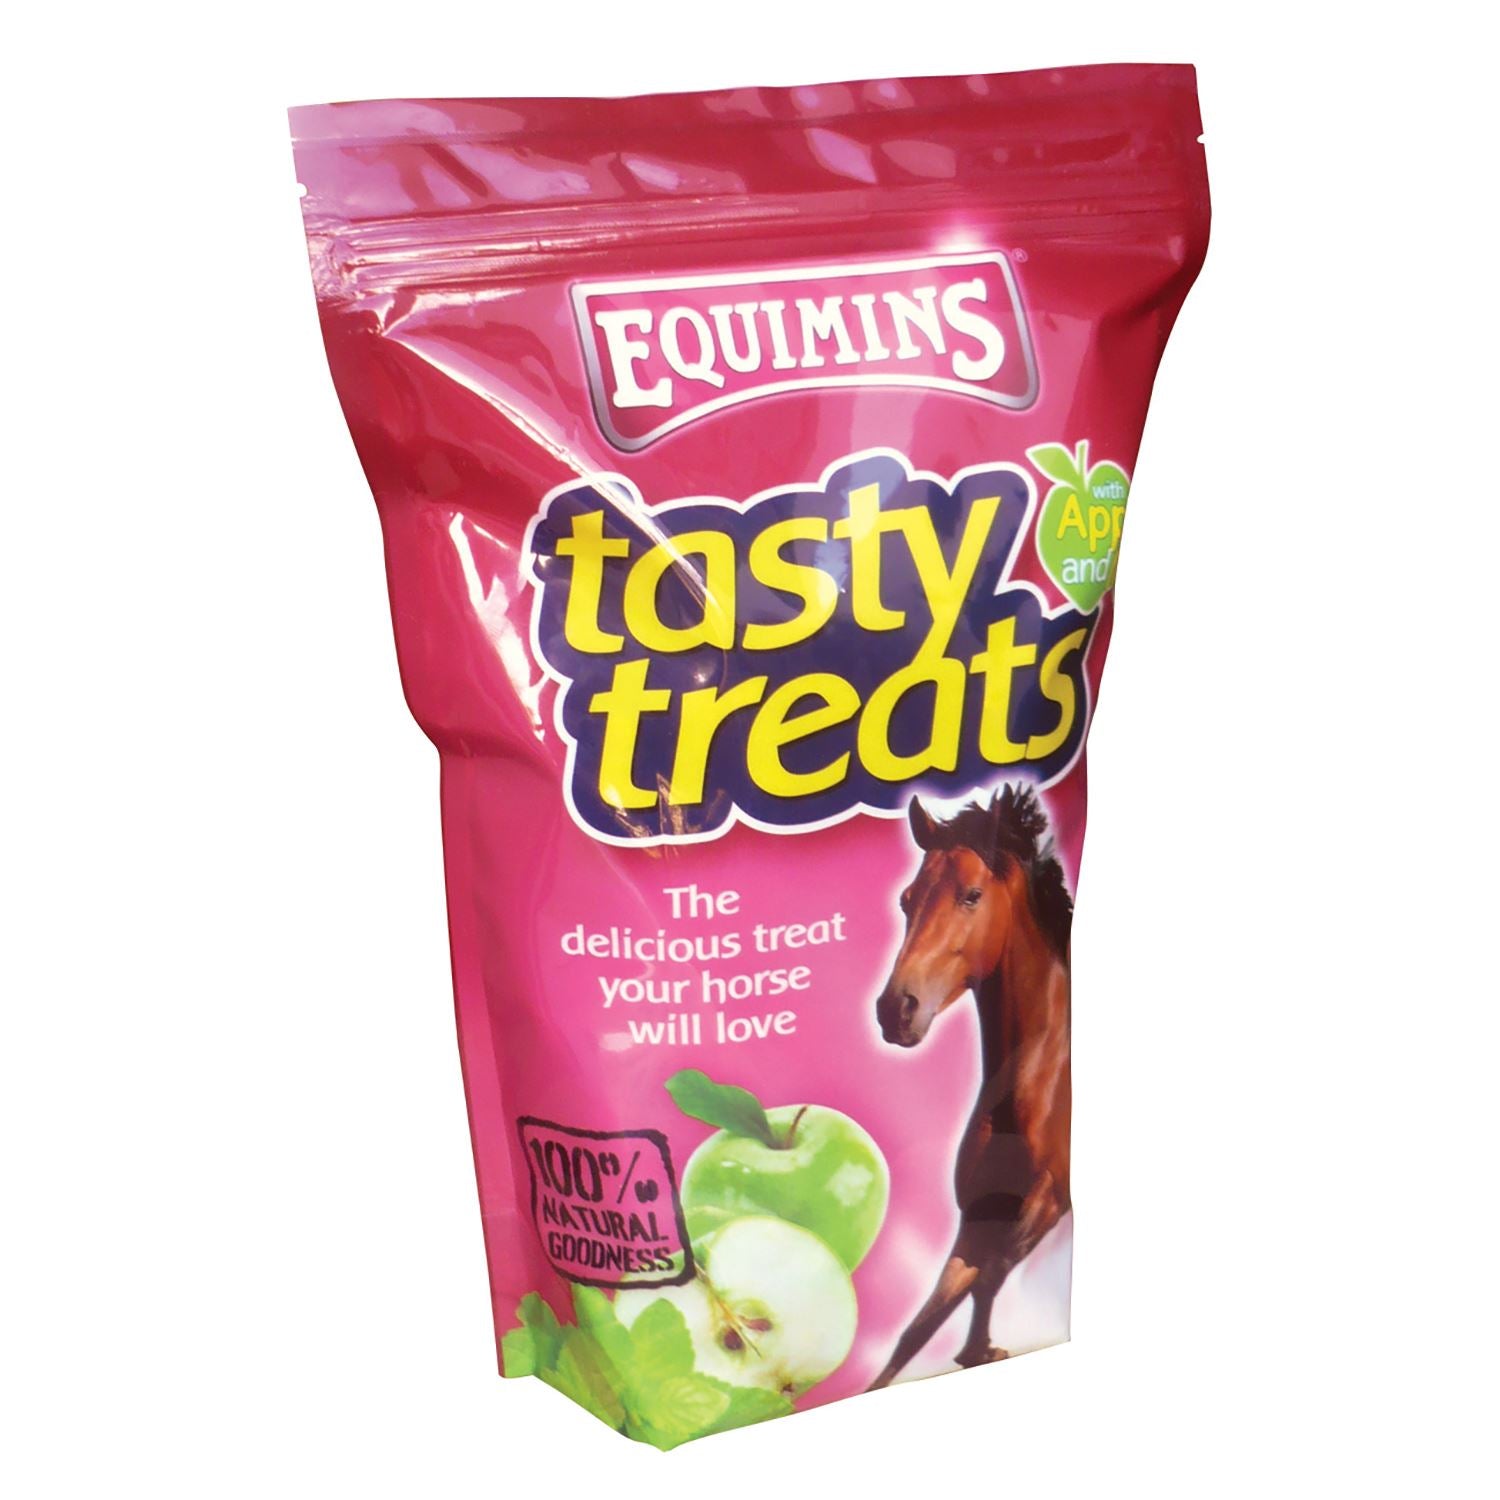 Equimins Tasty Treats - Just Horse Riders